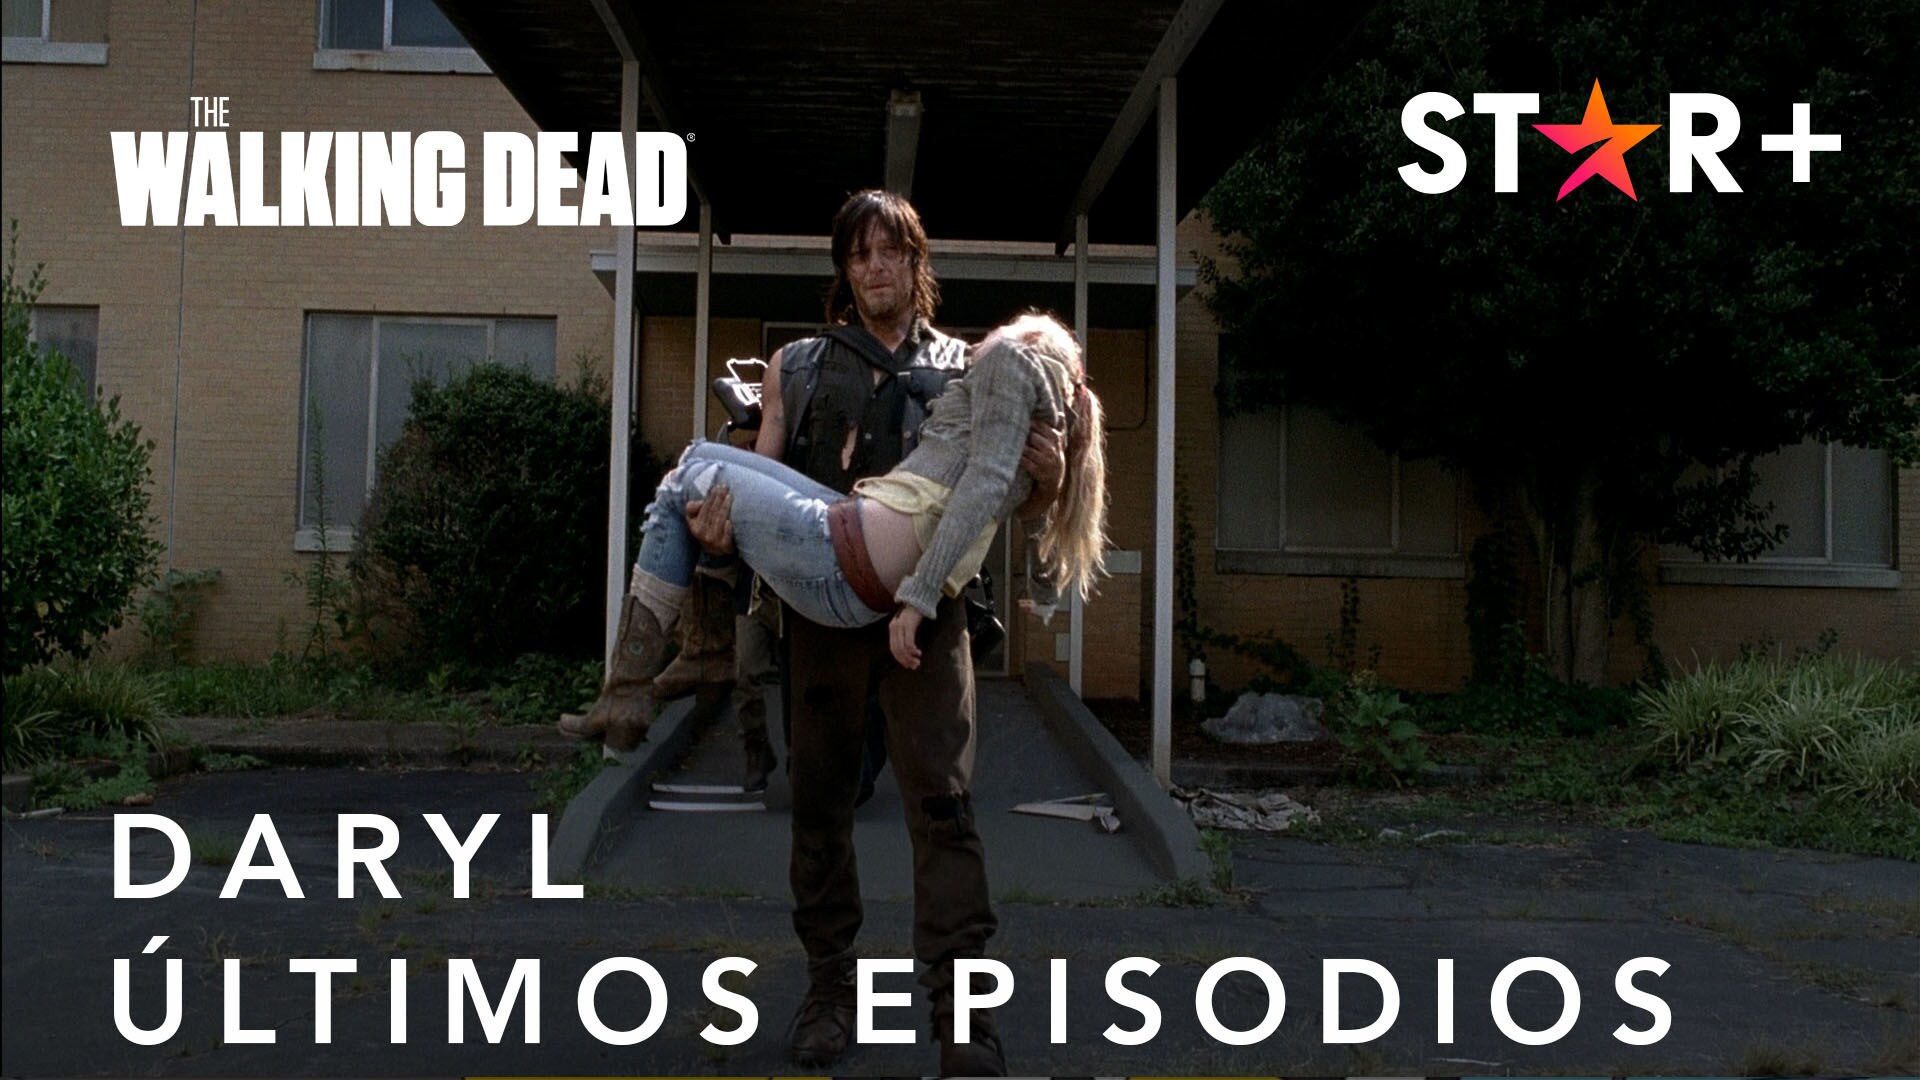 The Walking Dead | Daryl | Últimos Episodios | Star+